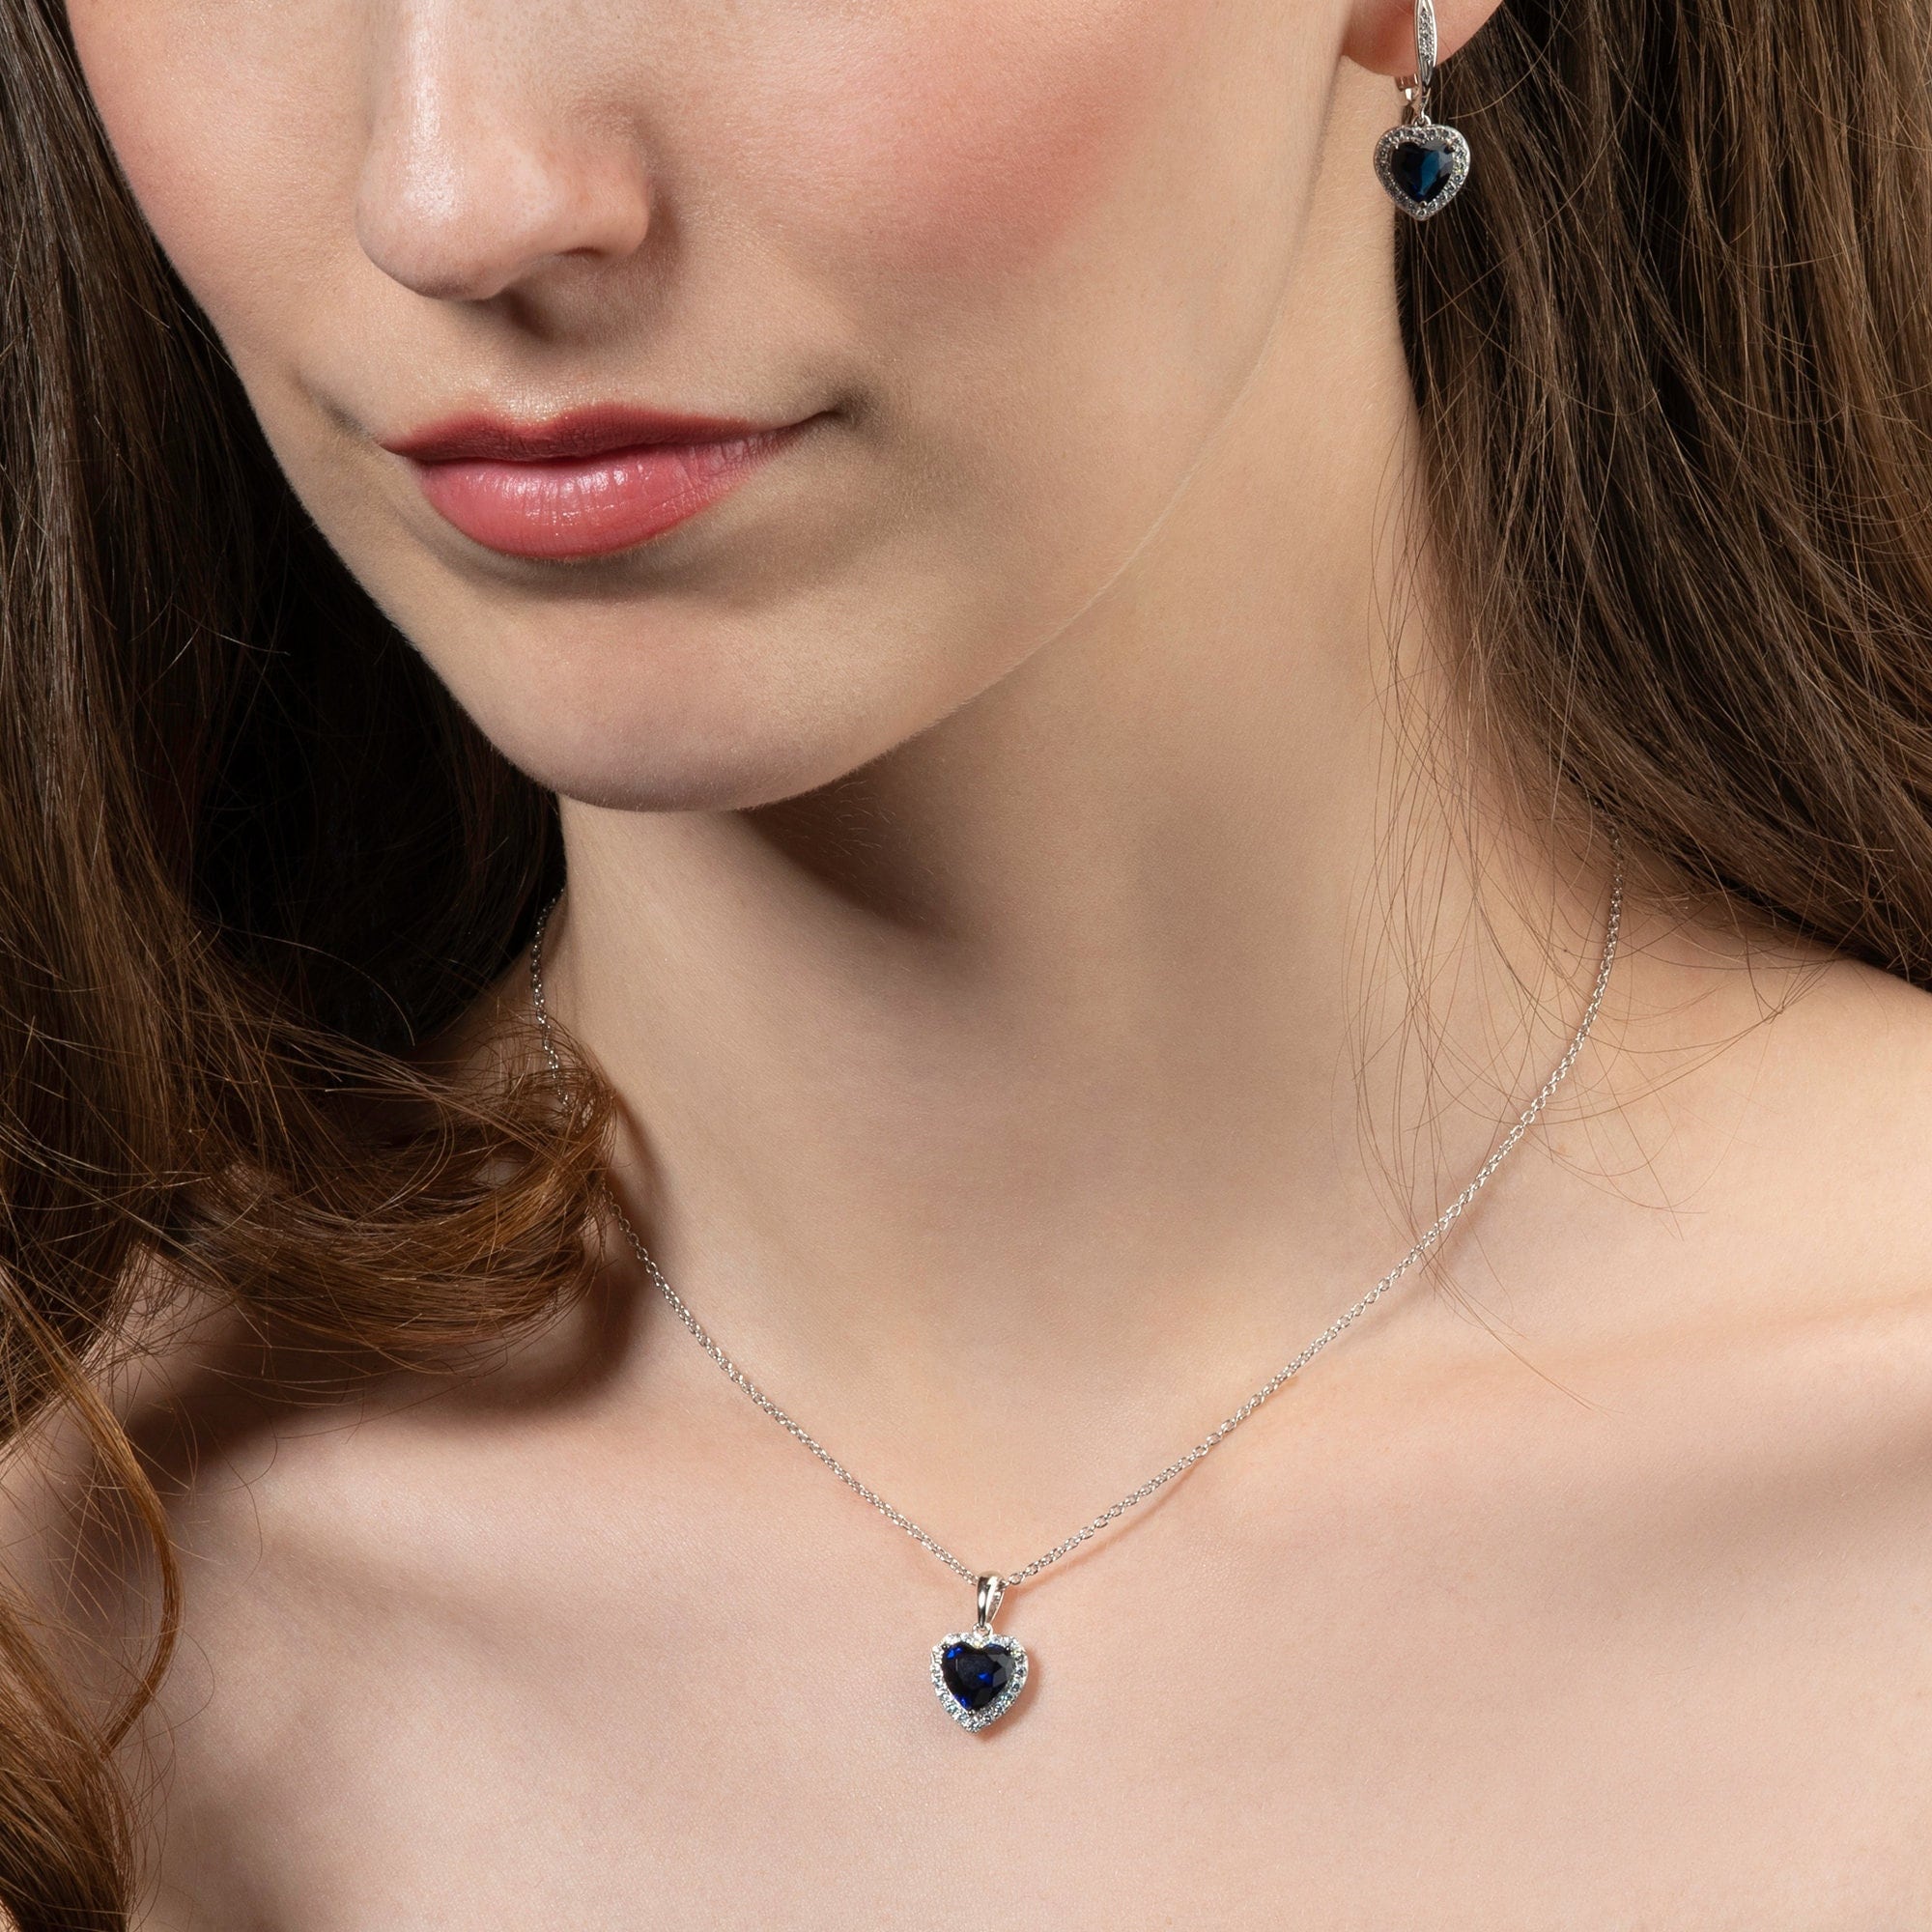 Simple Jewelry Set Heart Shaped Zircon Charm Necklace & Stud Earrings  Adjustable Chain For Teen Girls Women Birthday Gift